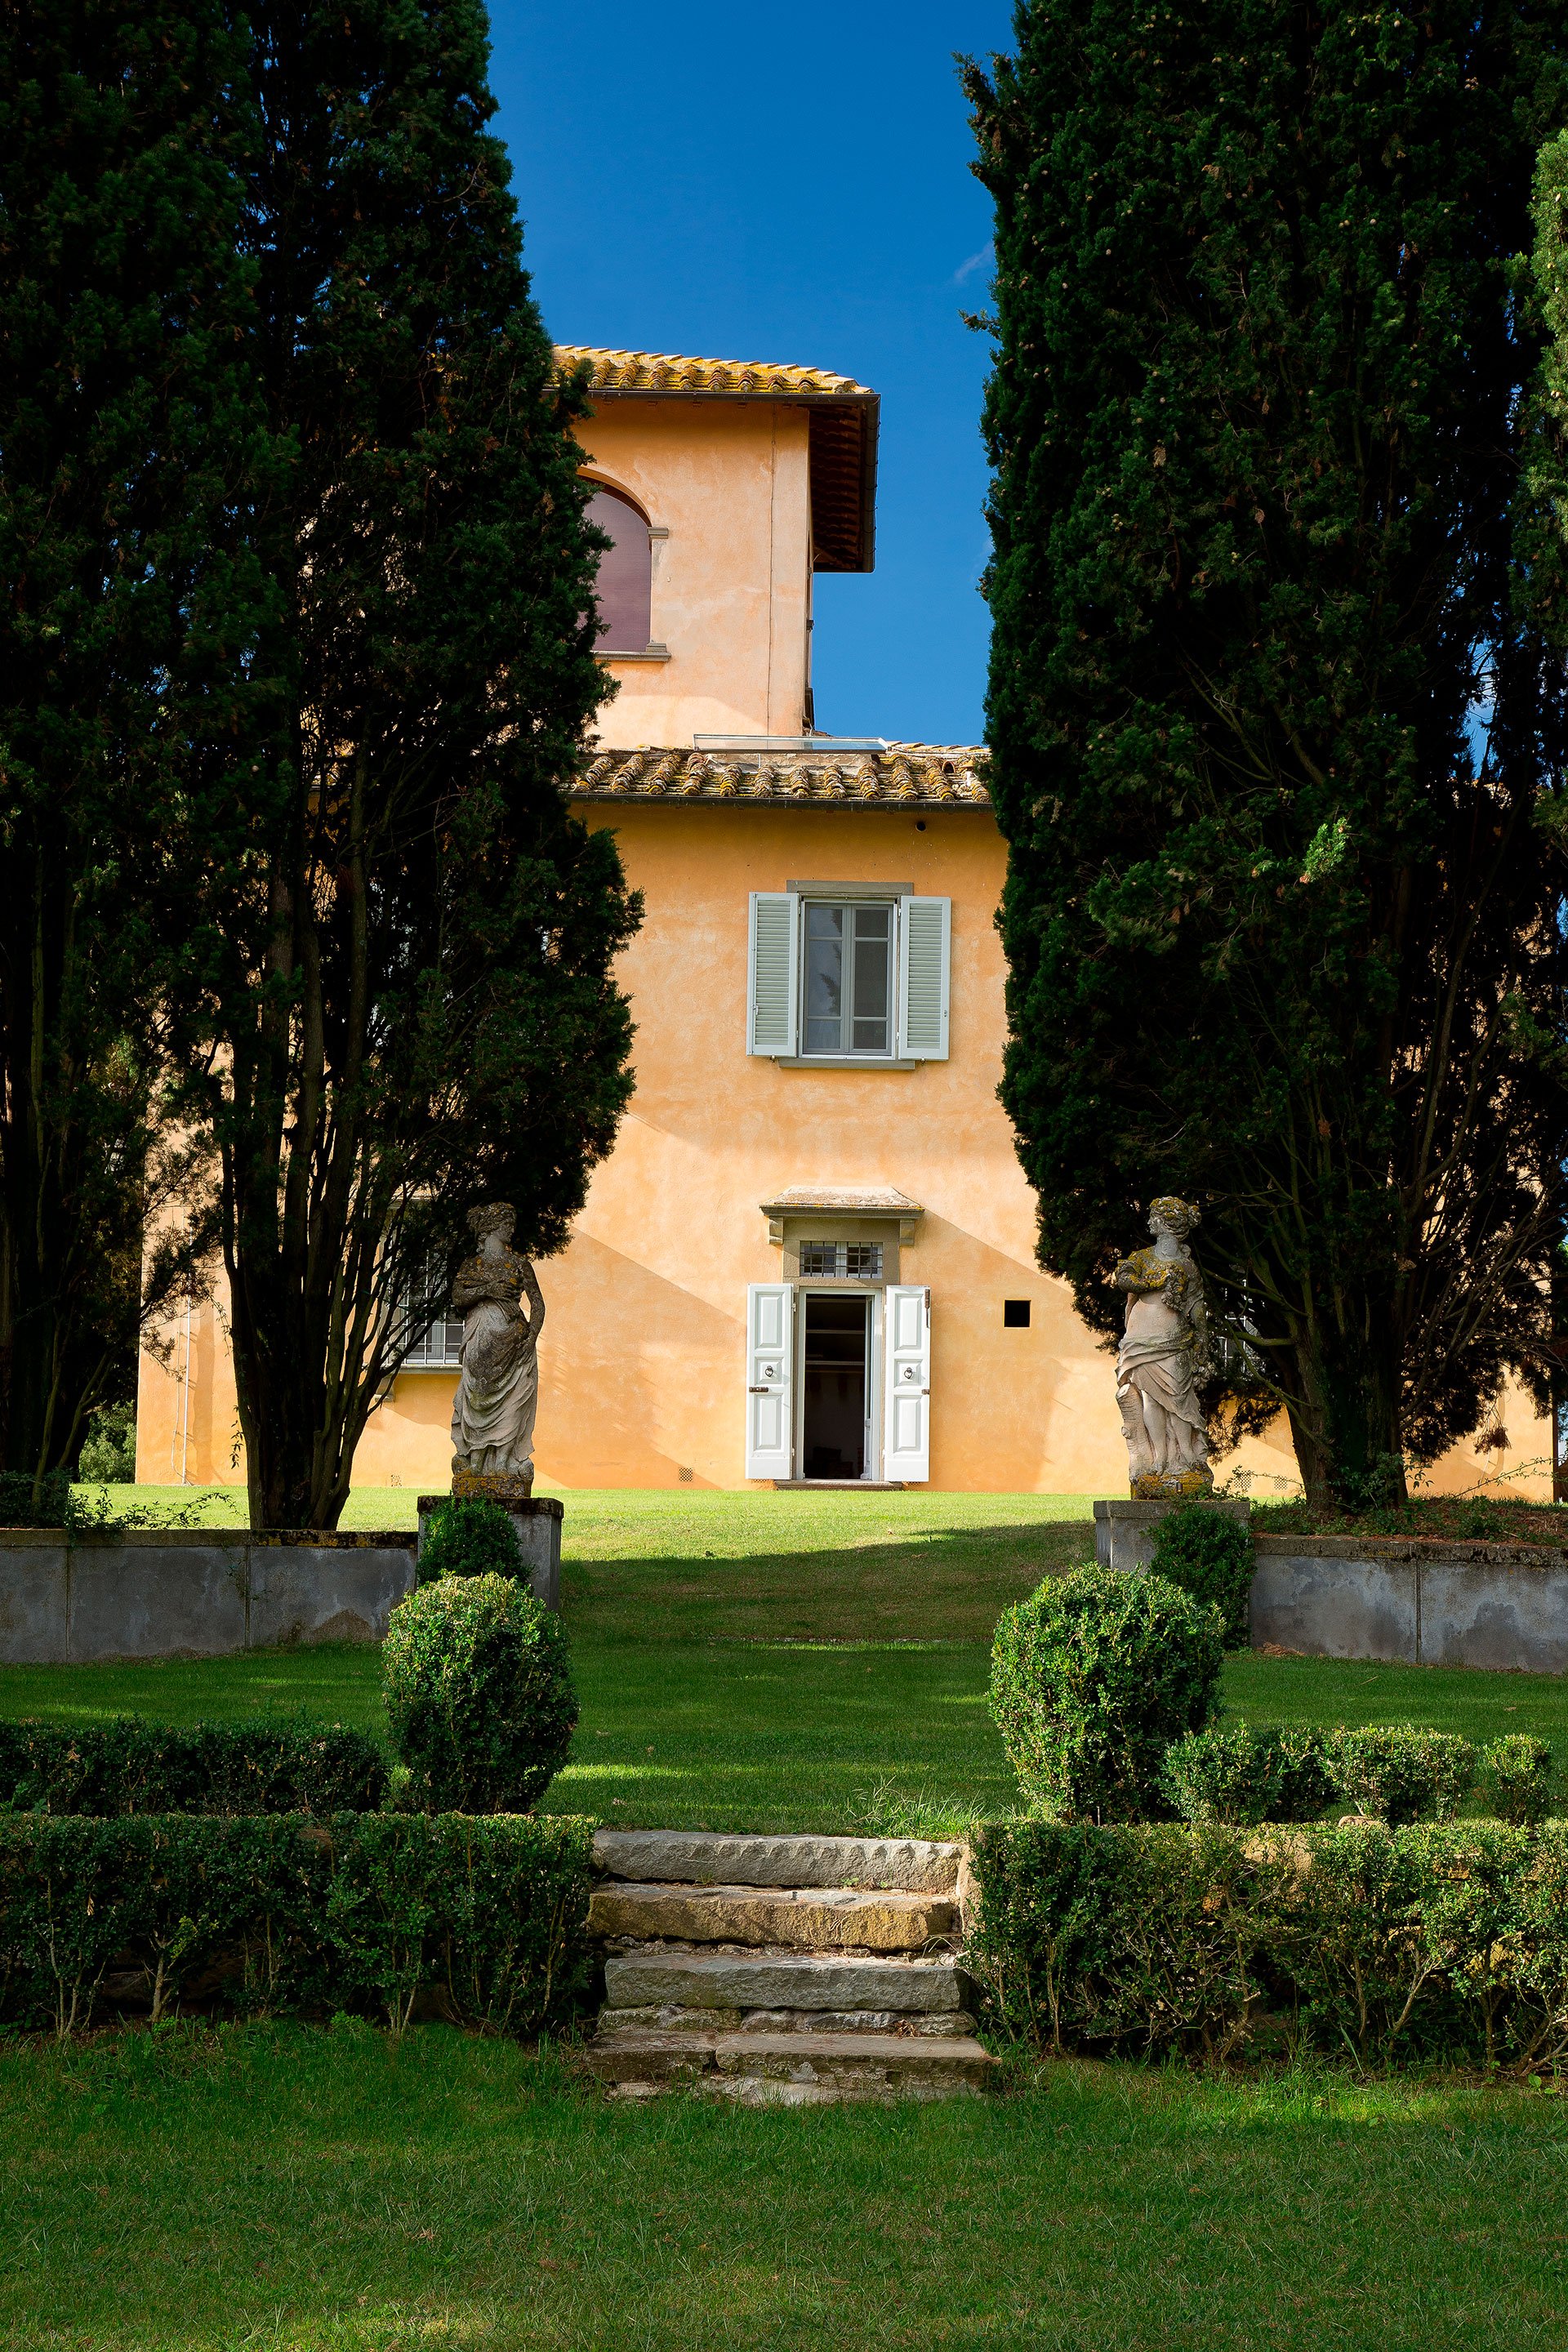 Francis York Villa La Tavernaccia: Luxury Villa Rental Near Florence, Italy 4.jpg